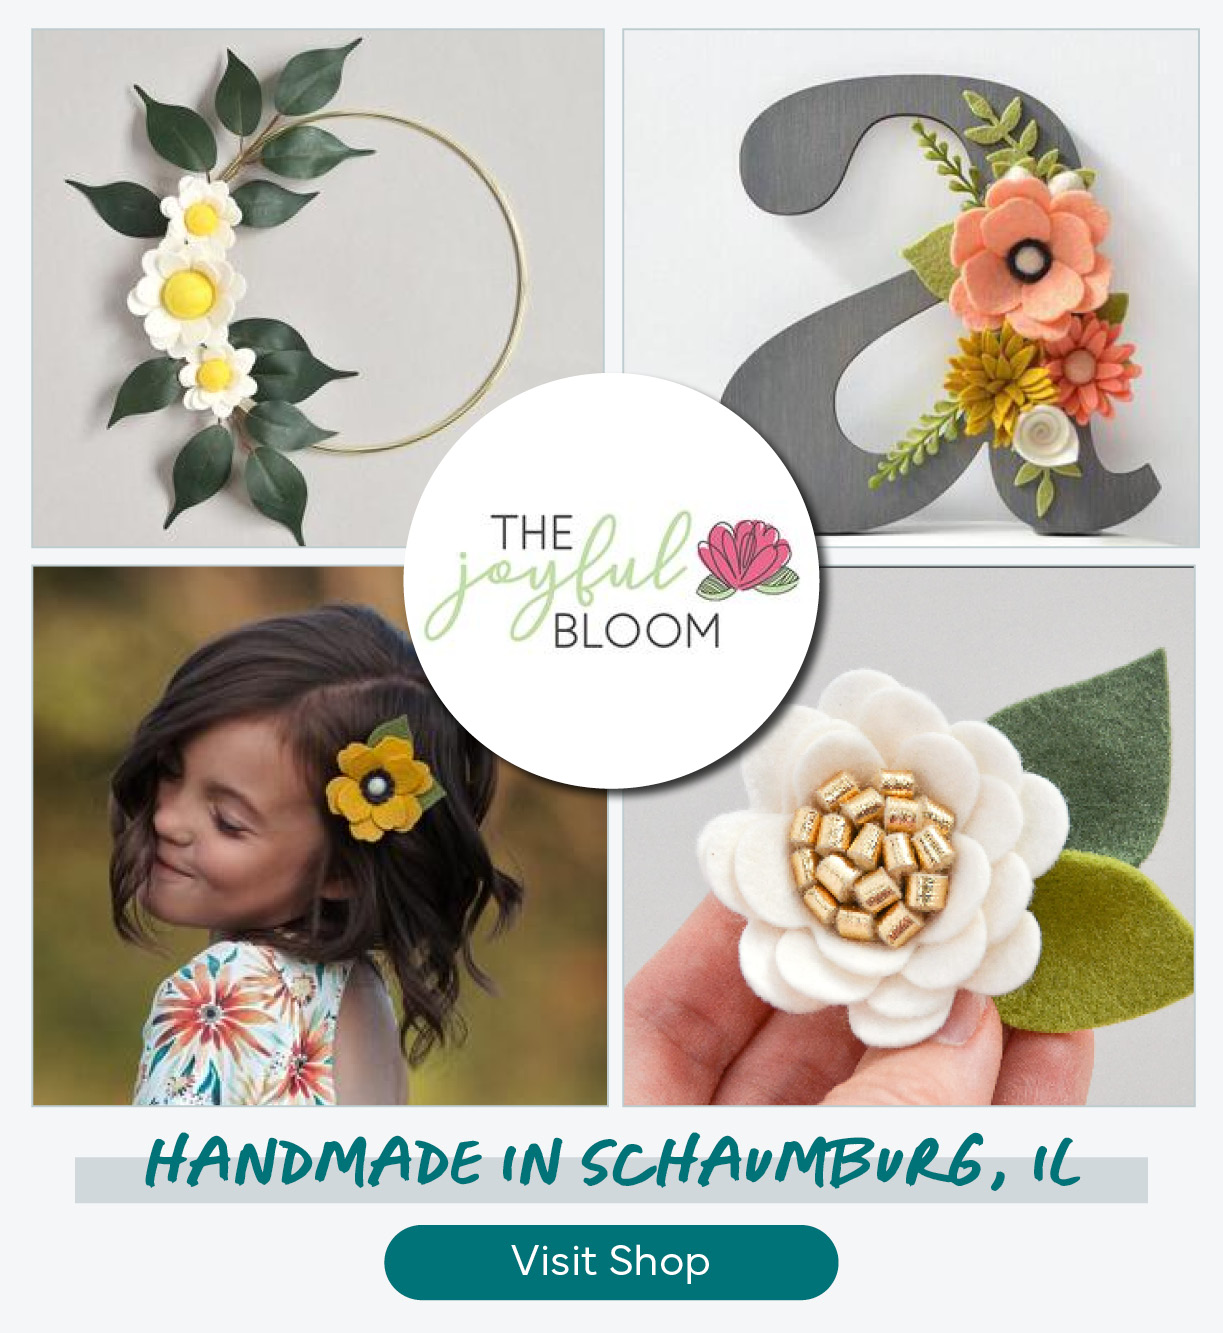 Handmade in Illinois: Felt Flower Decor and Accessories